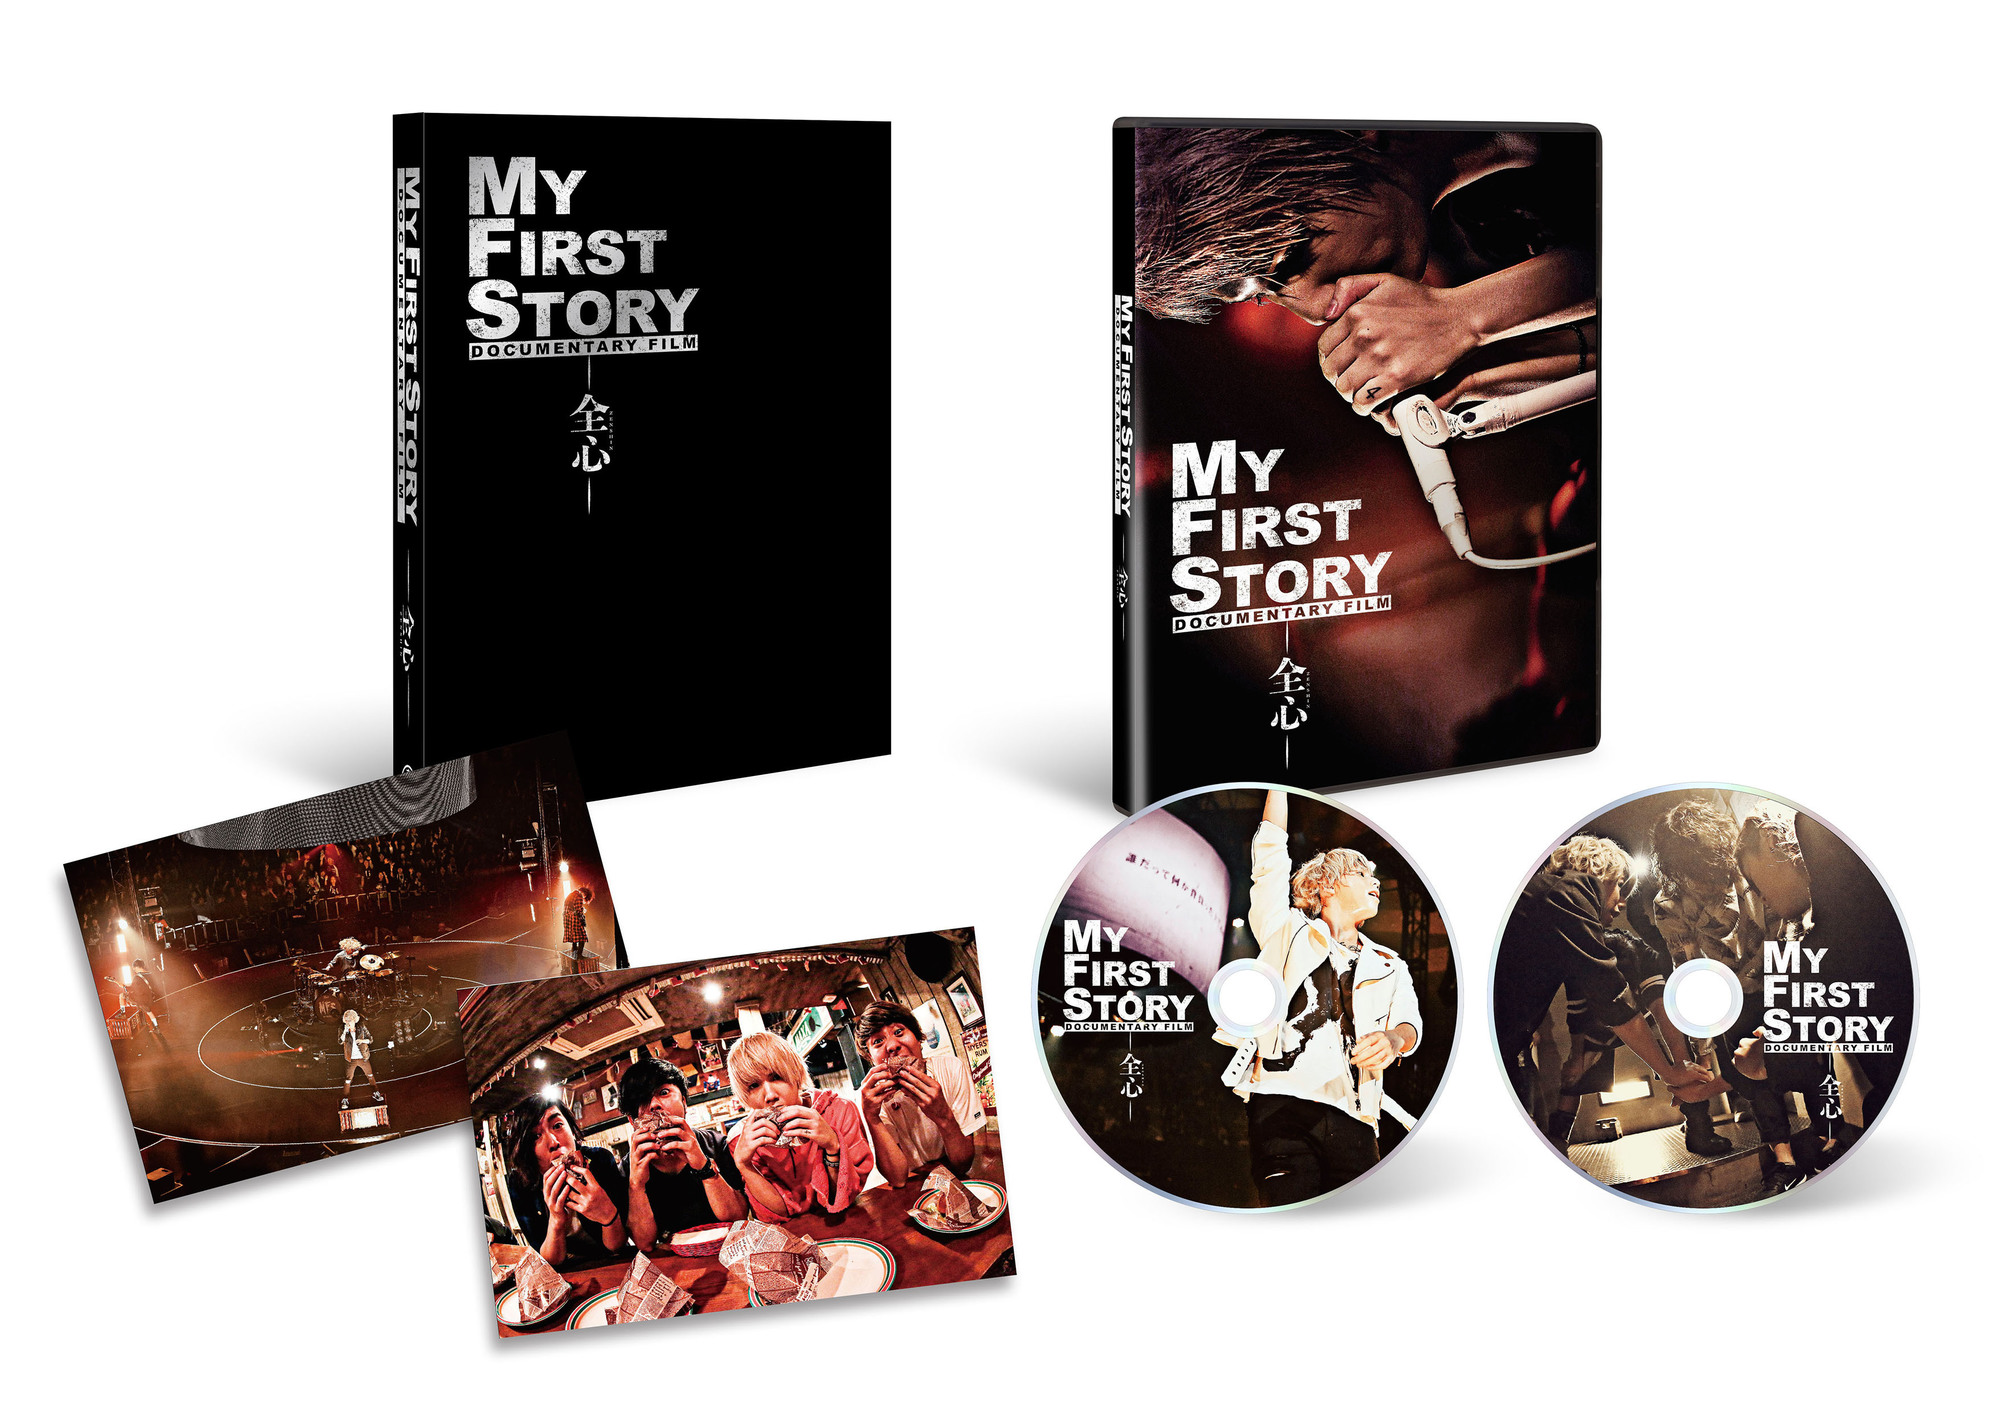 MY FIRST STORY ストーリーテラー限定 DVD - ミュージック